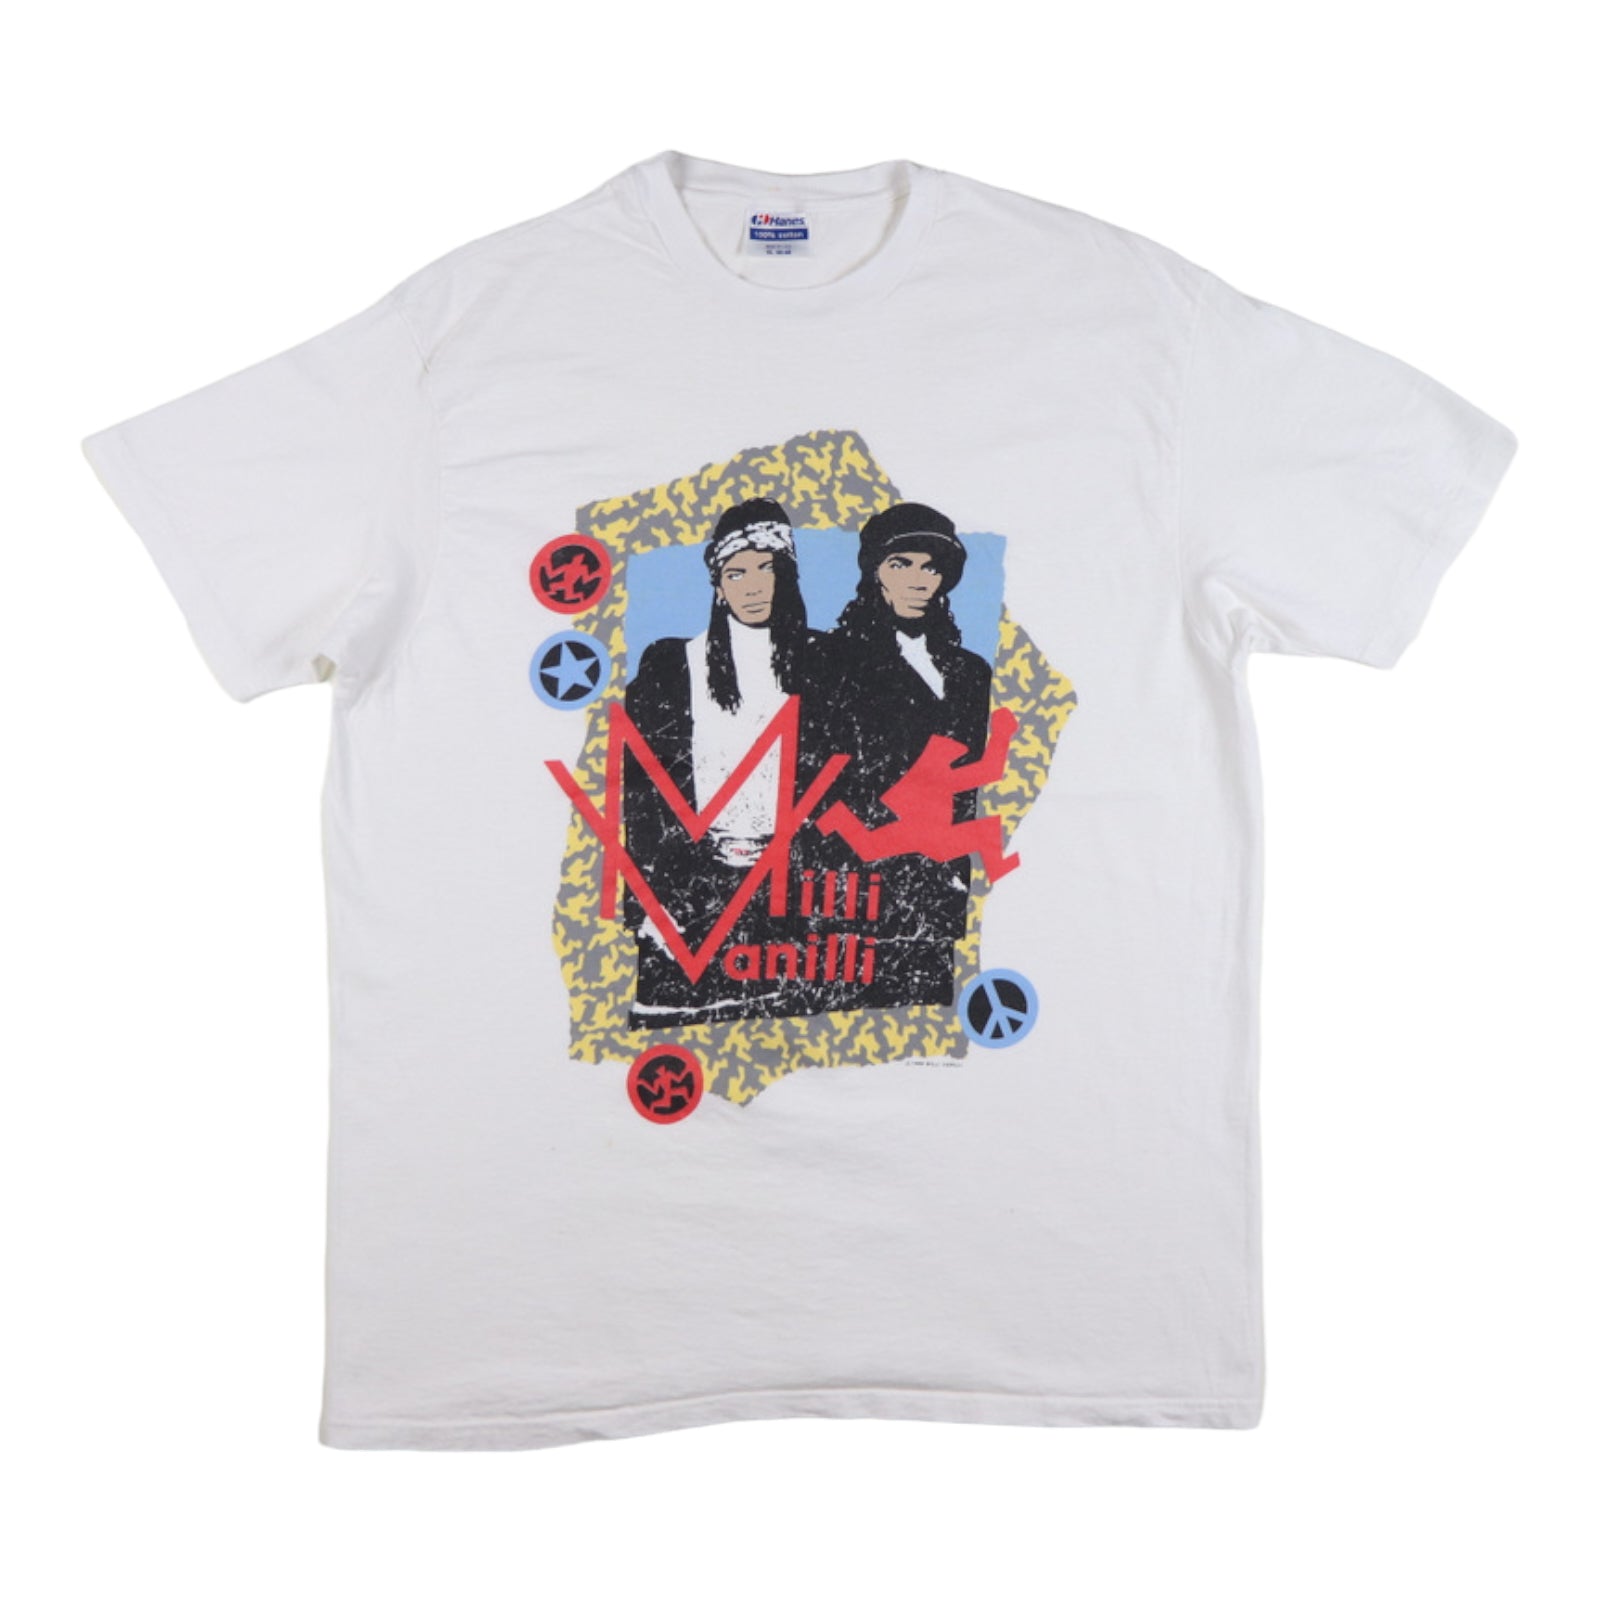 1989 Milli Vanilli Shirt